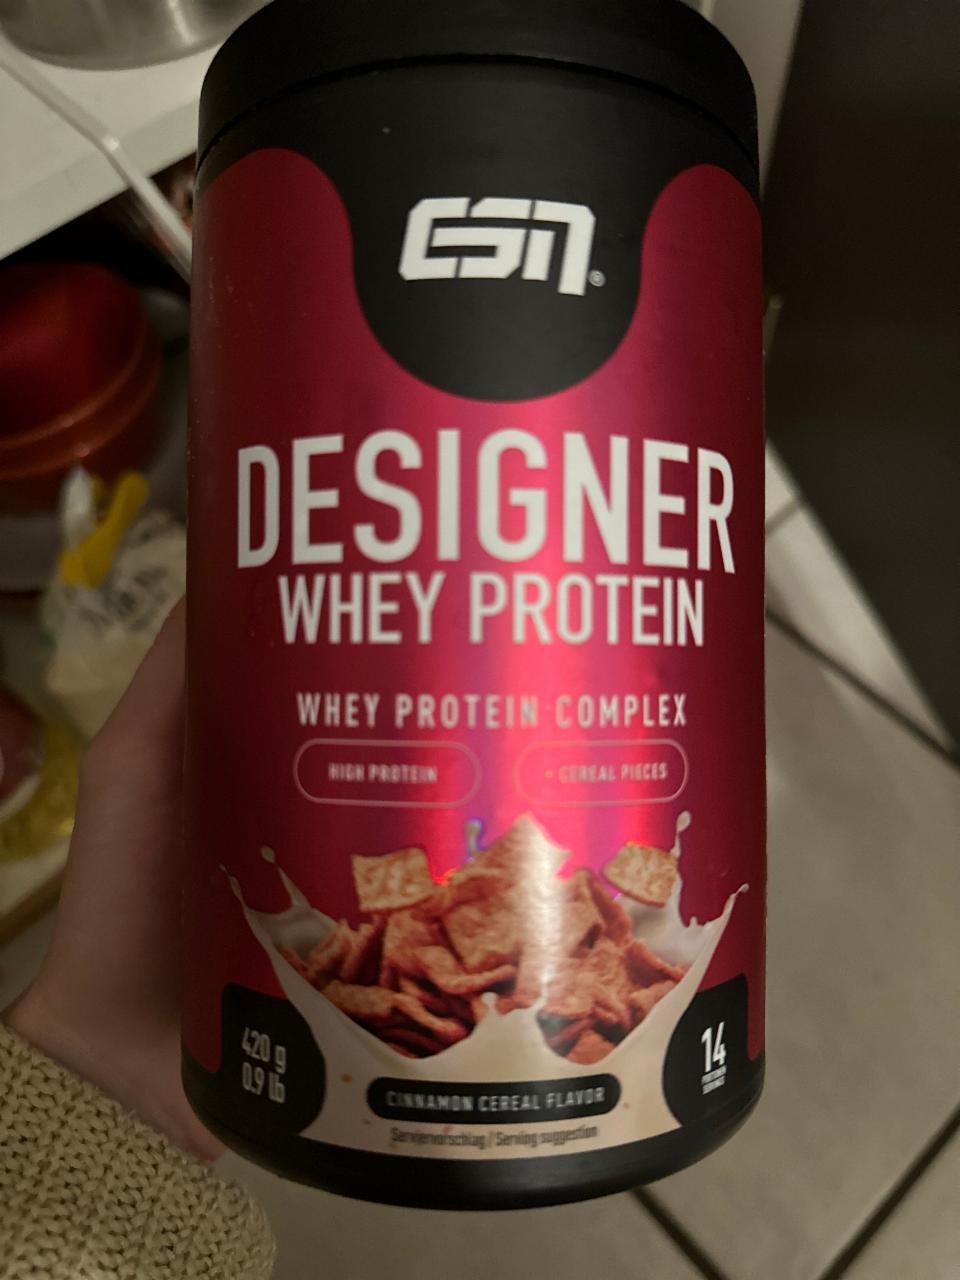 Fotografie - Designer whey protein Cinnamon cereal ESN